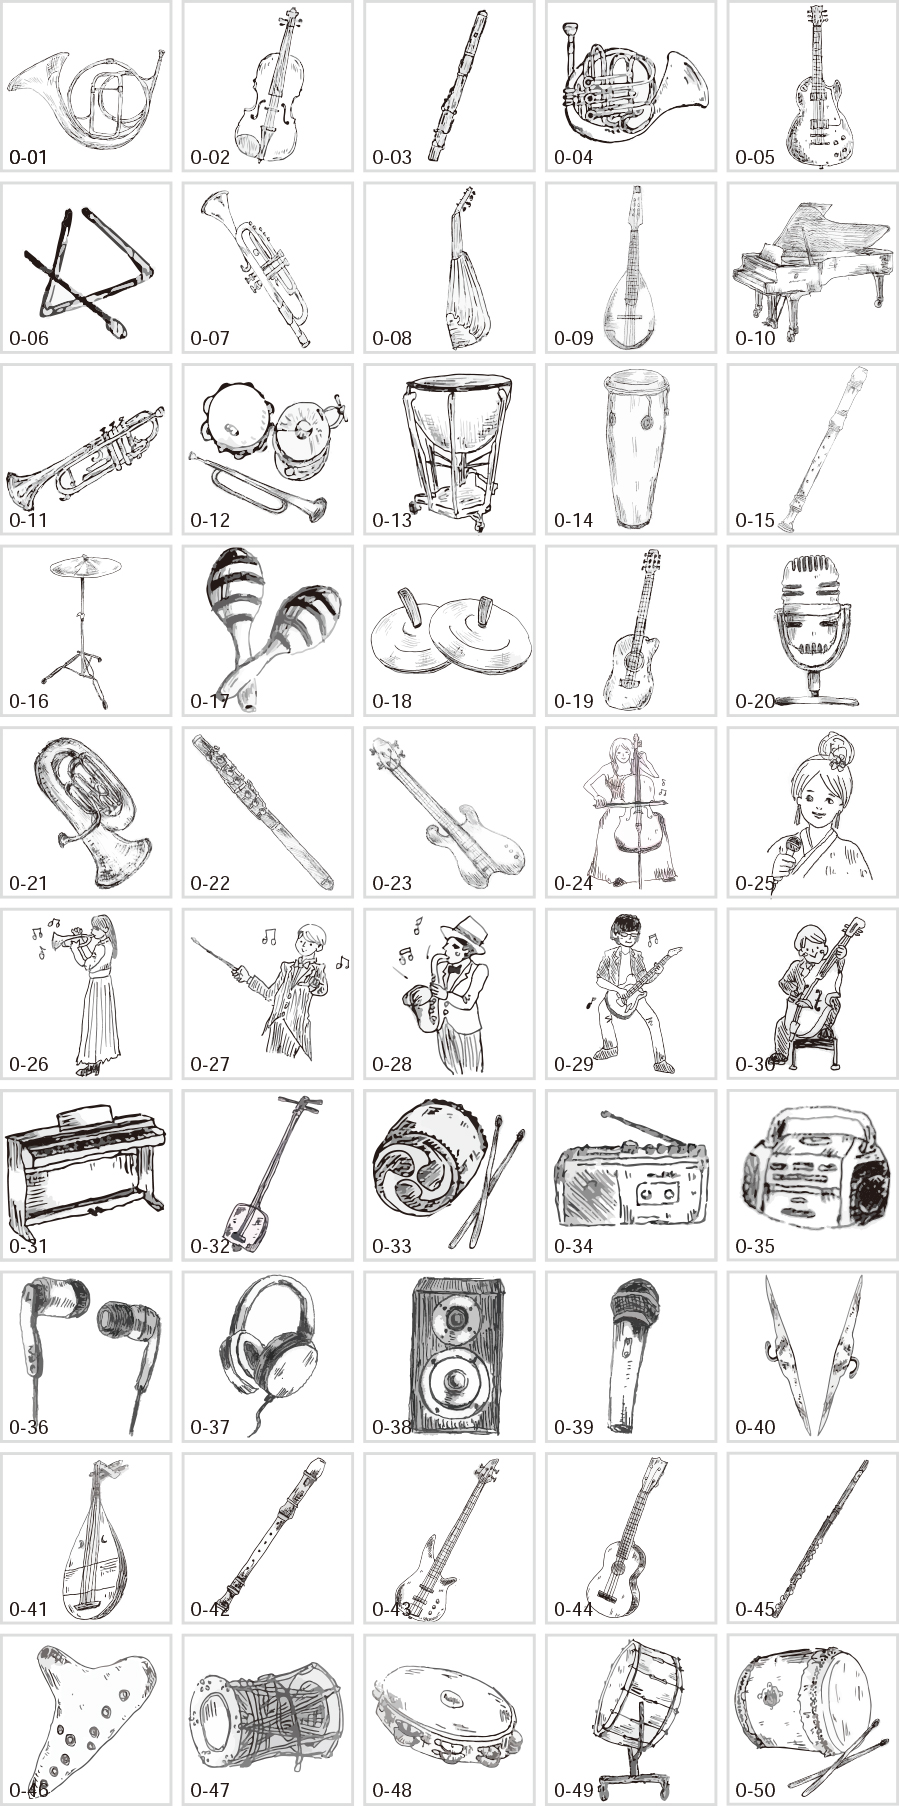 Musical instrument illustrations